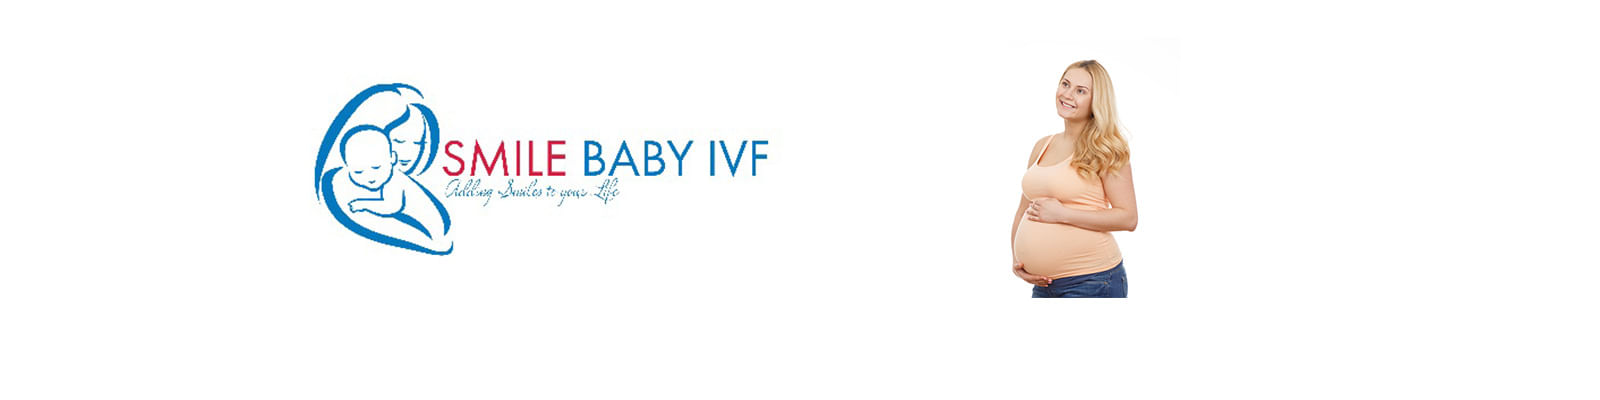 SMILE BABY IVF/K C Raju Multispeciality Hospital